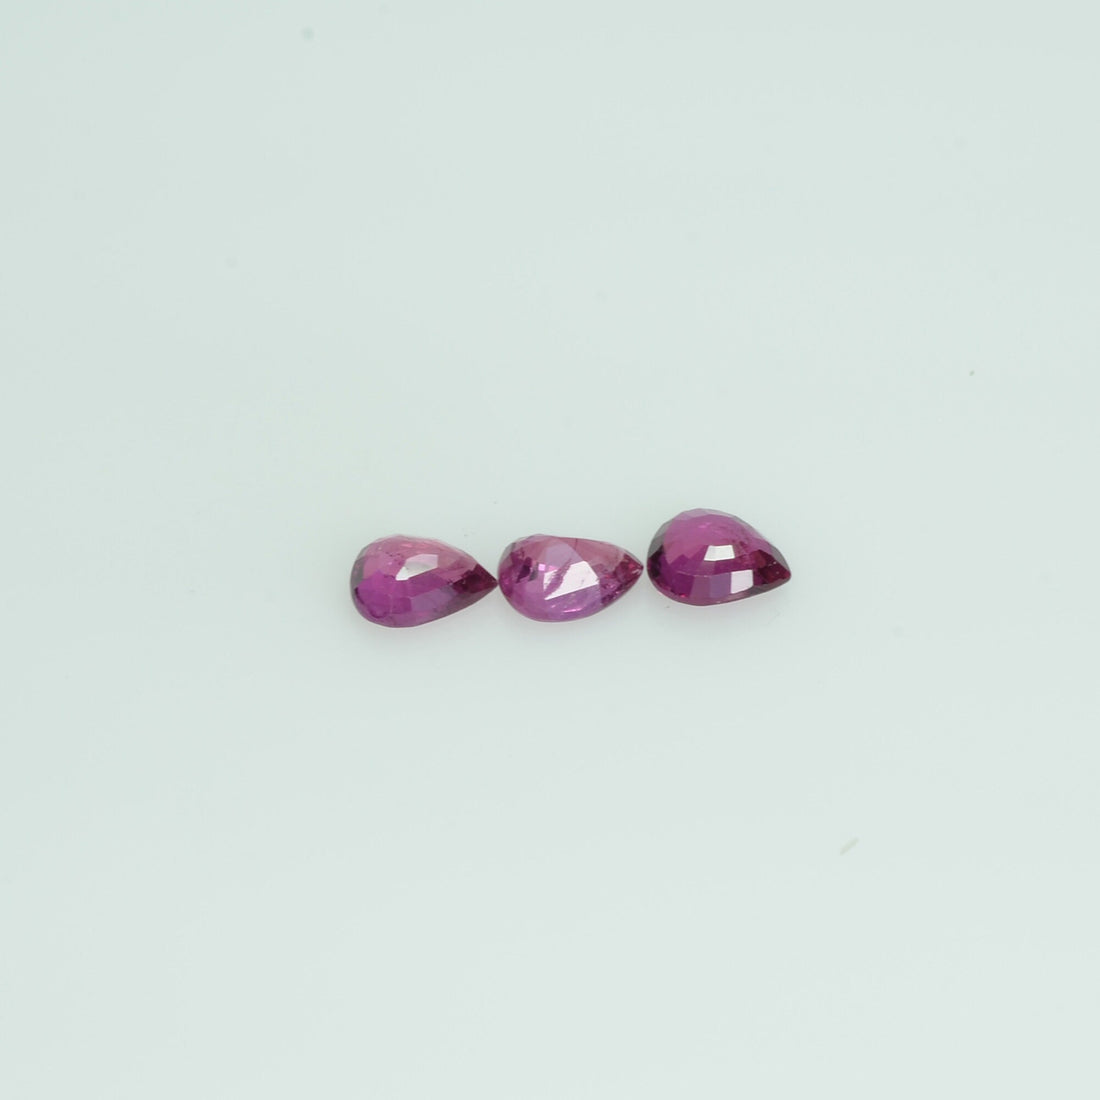 5x4 mm Lot Natural Ruby Loose Gemstone Pear Cut